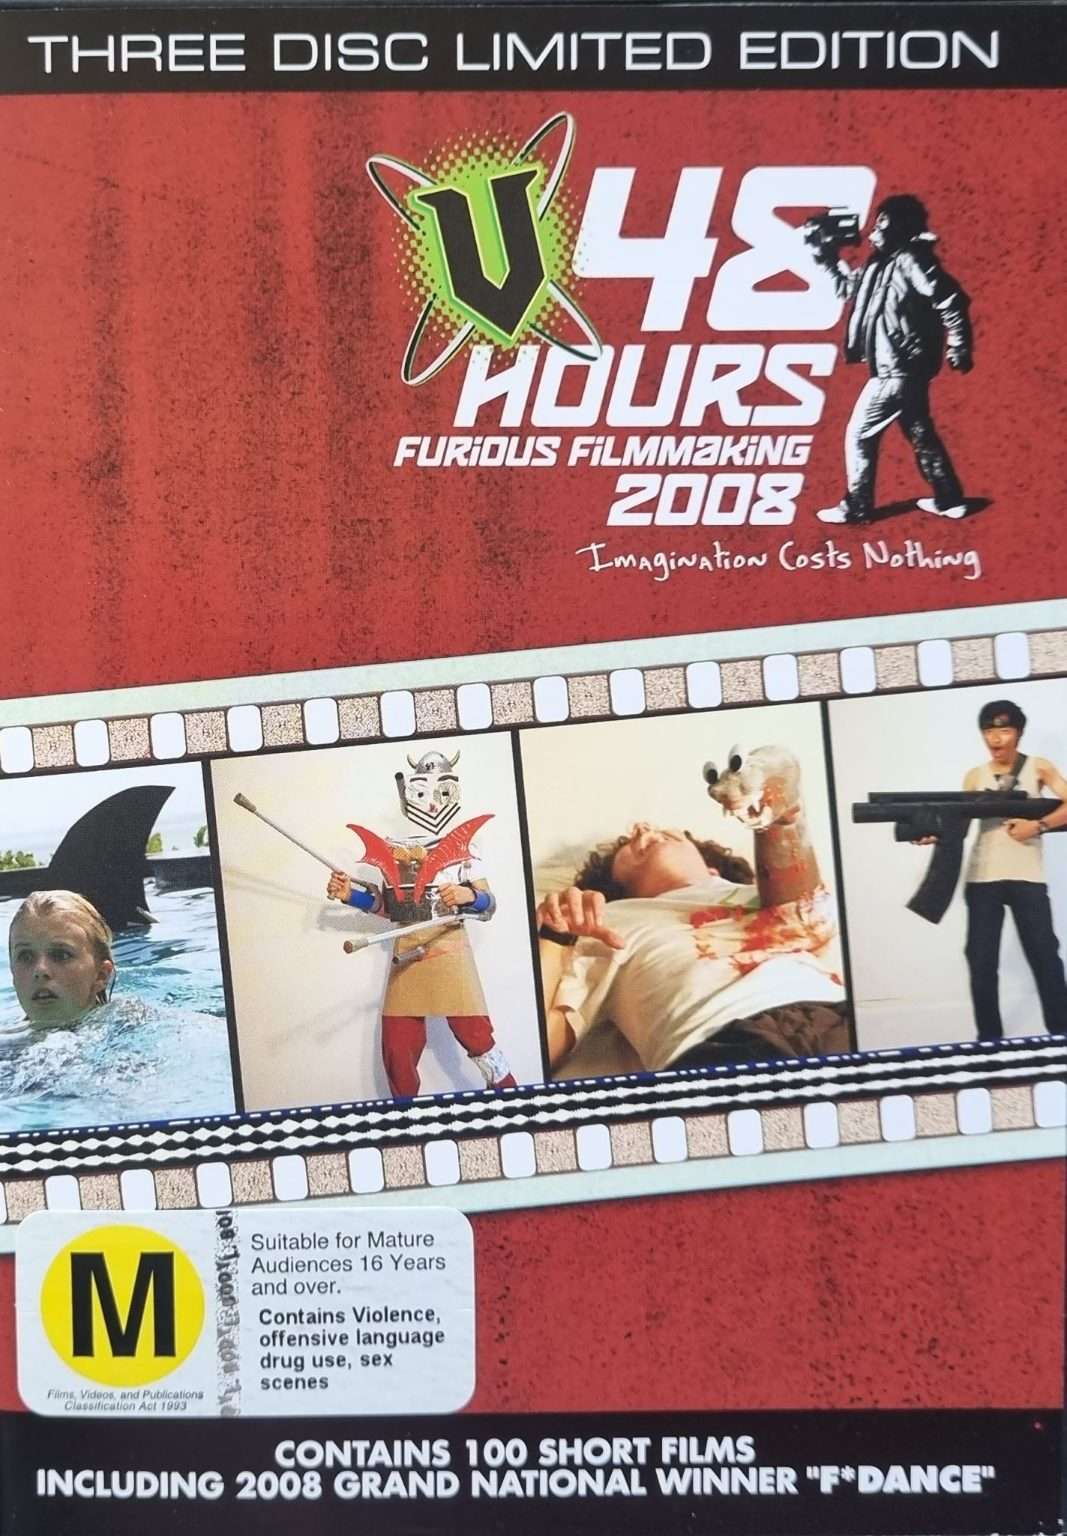 48 Hours Furious Filmmaking 2008